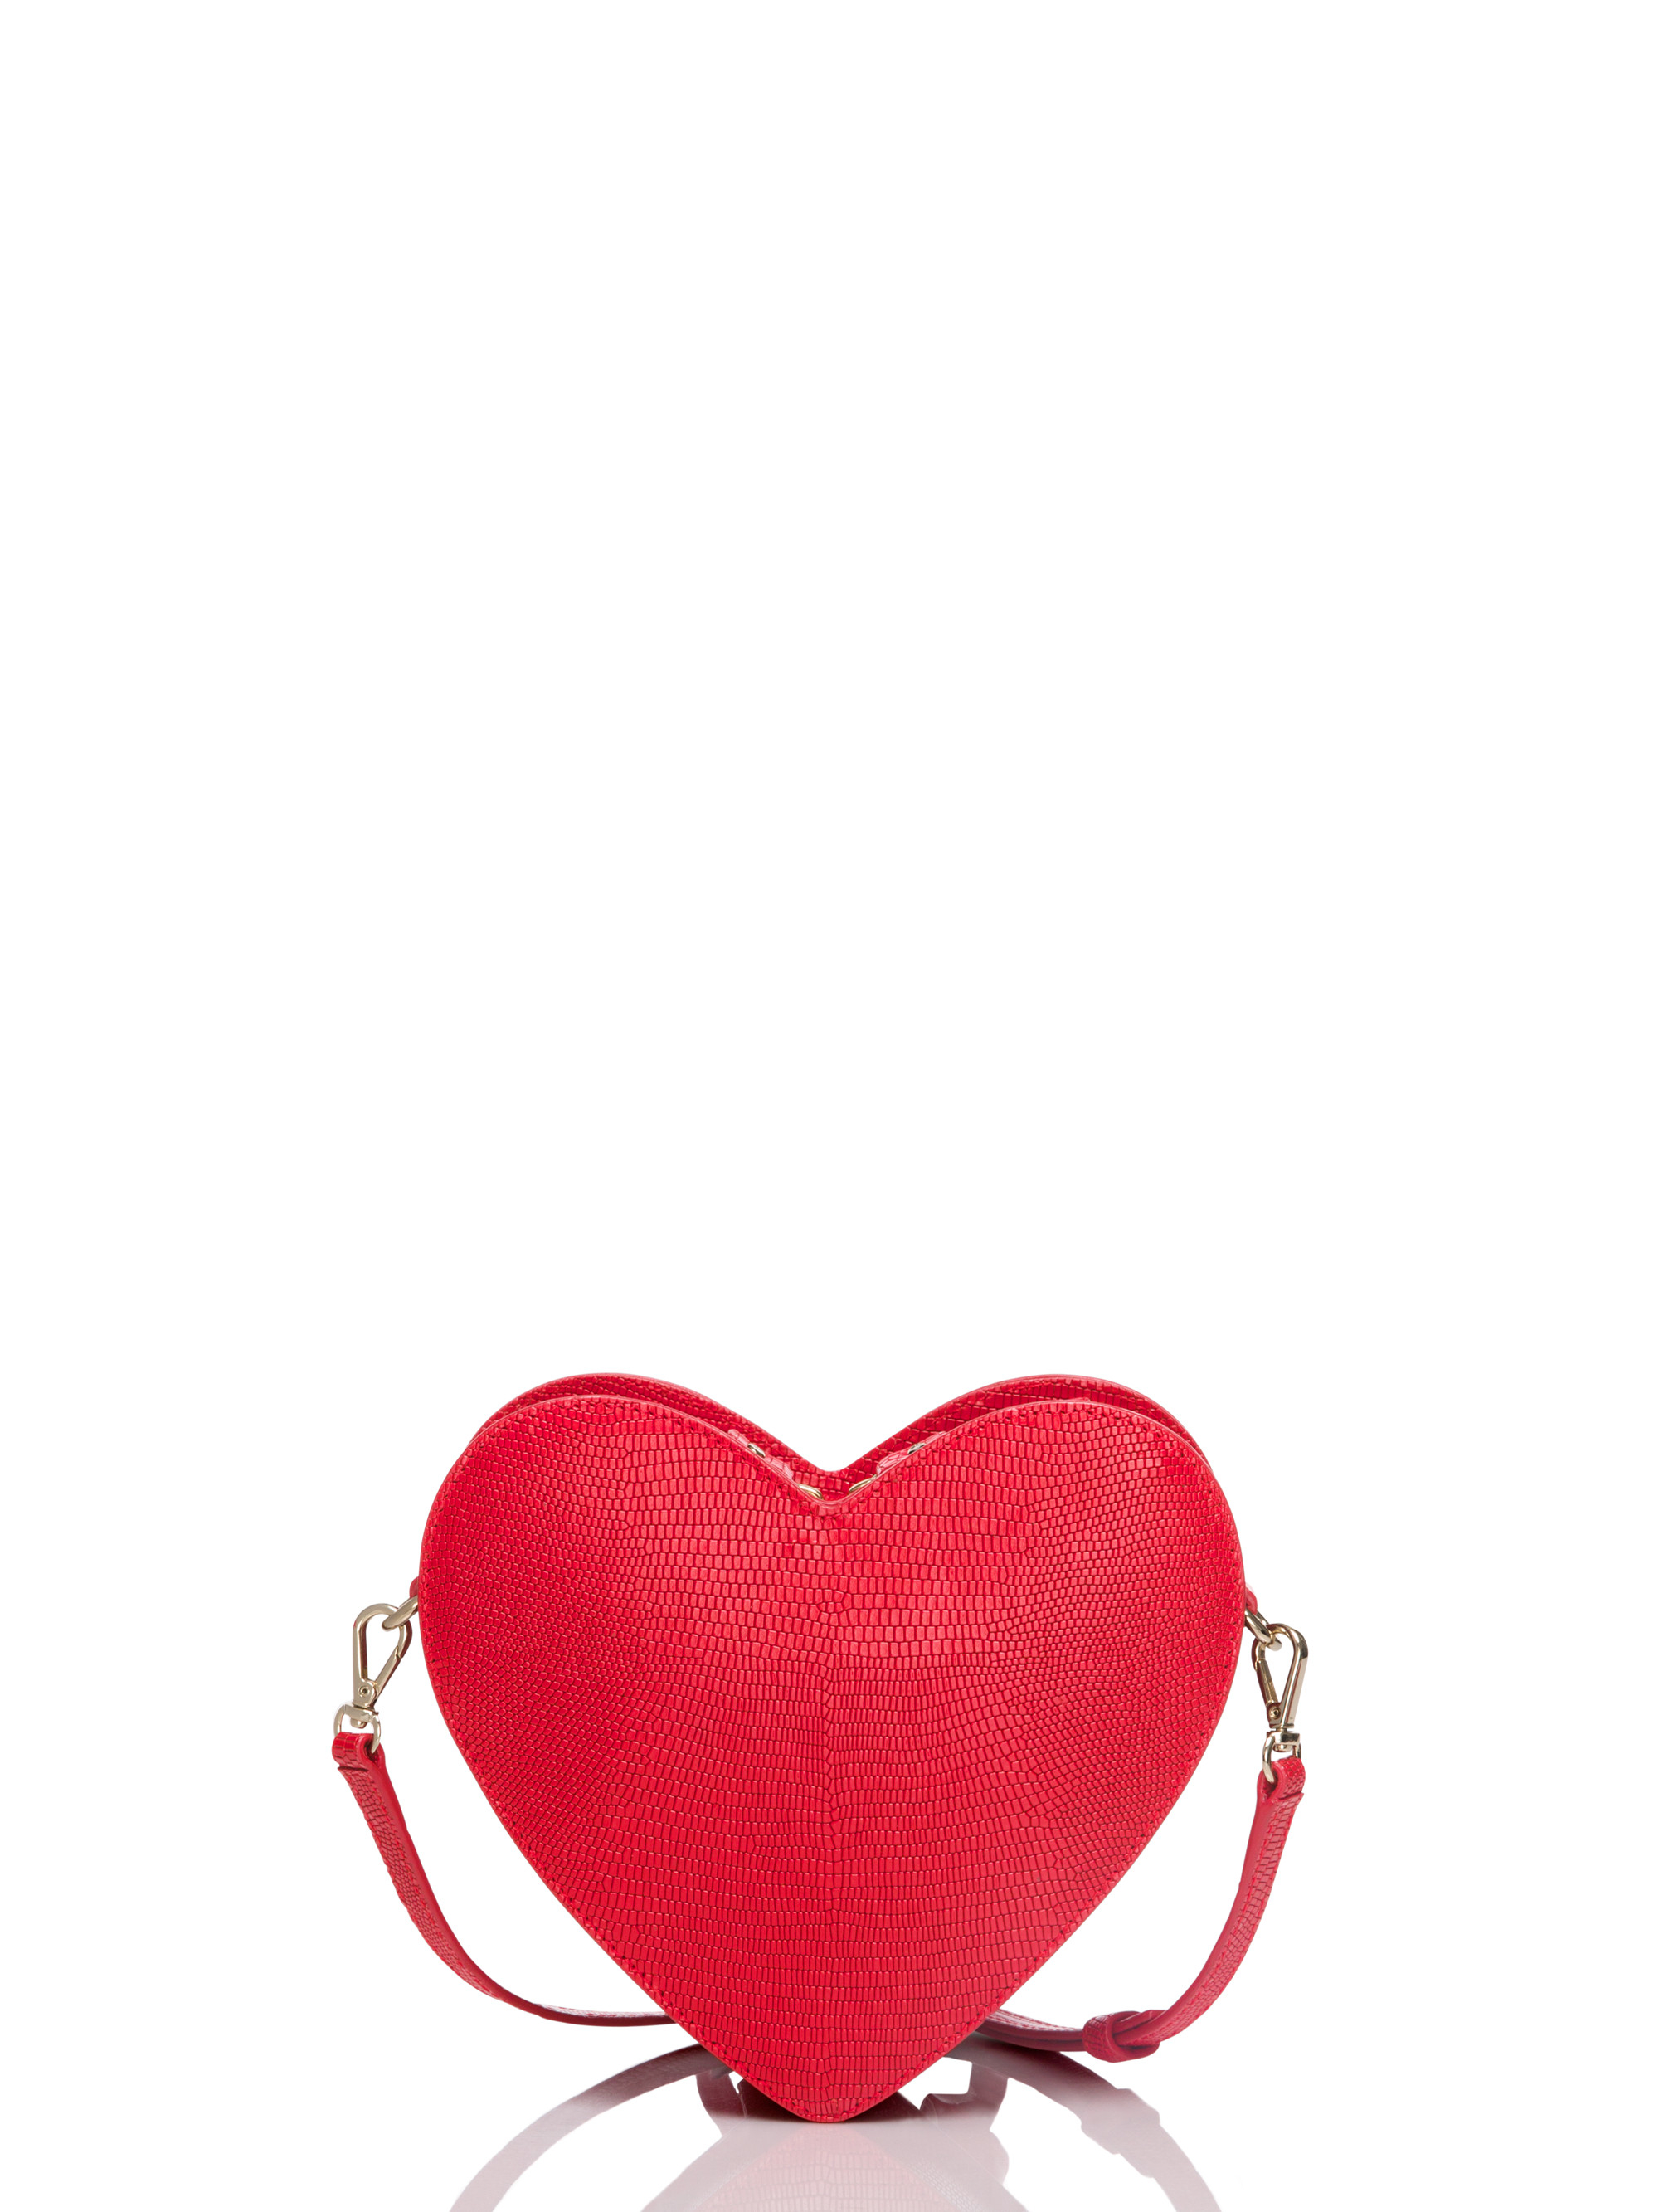 Kate Spade Secret Admirer Heart Crossbody in Cherry (Red) - Lyst